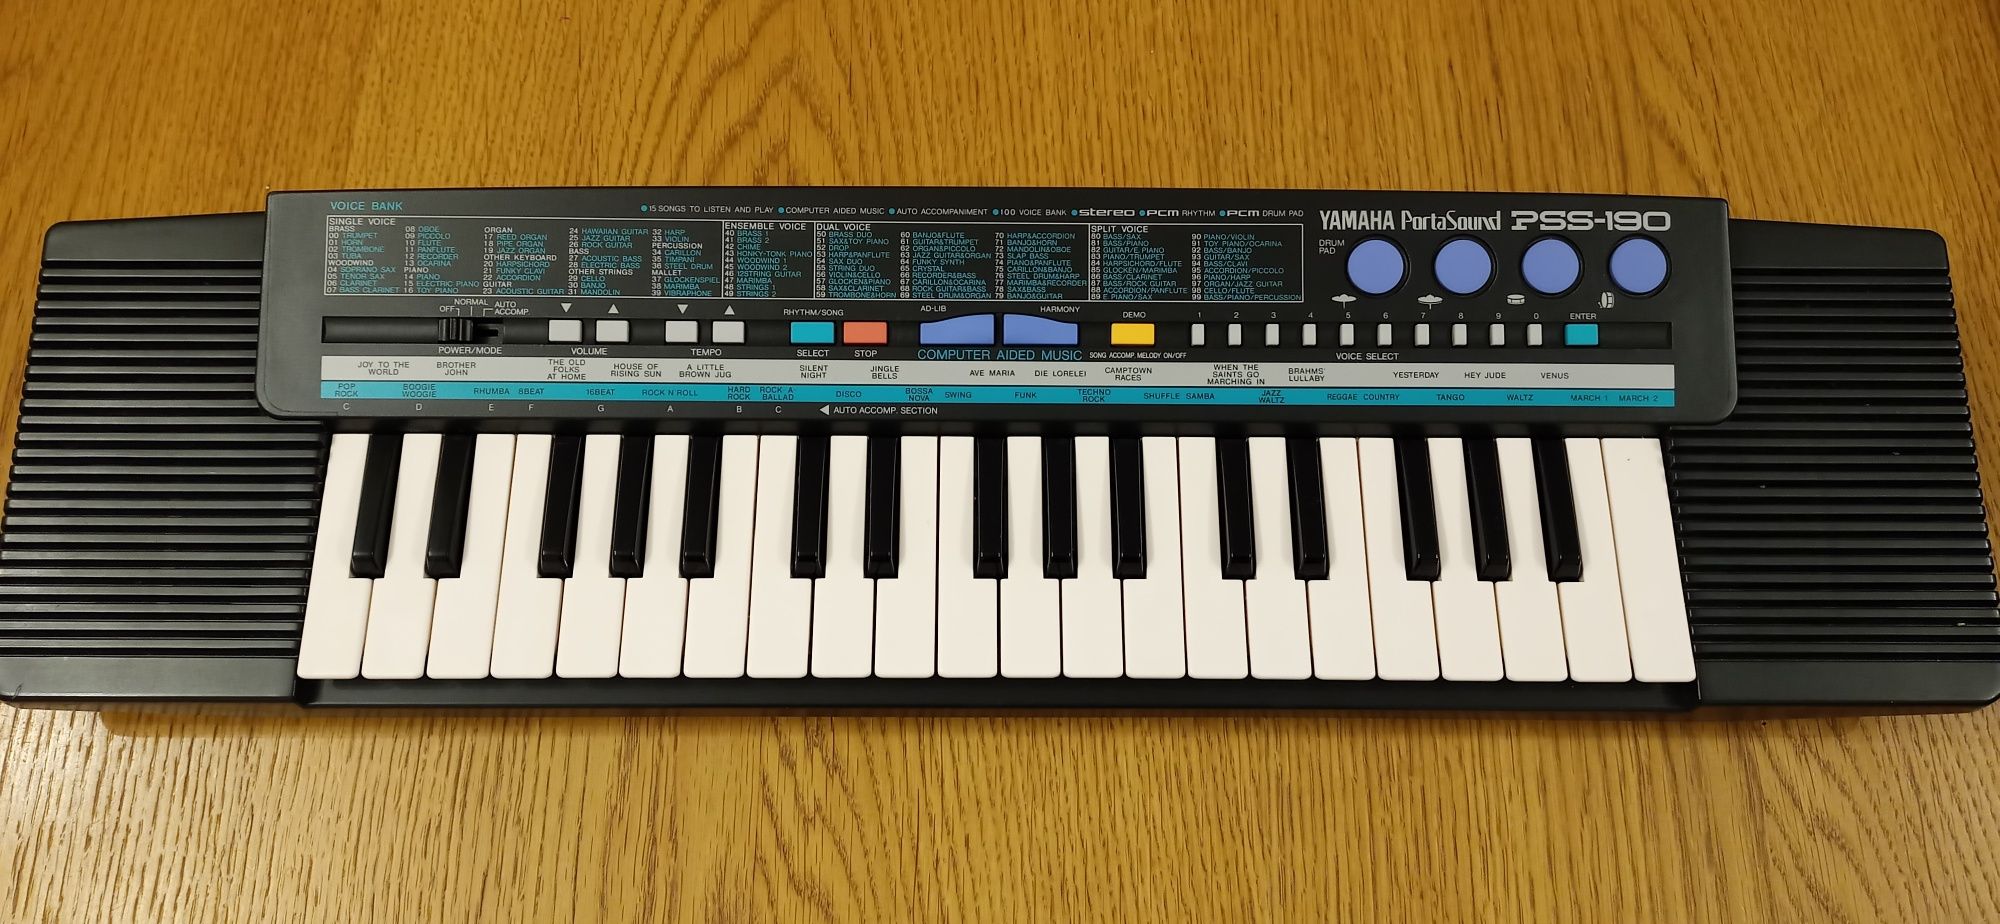 Keyboard Yamaha PSS-190